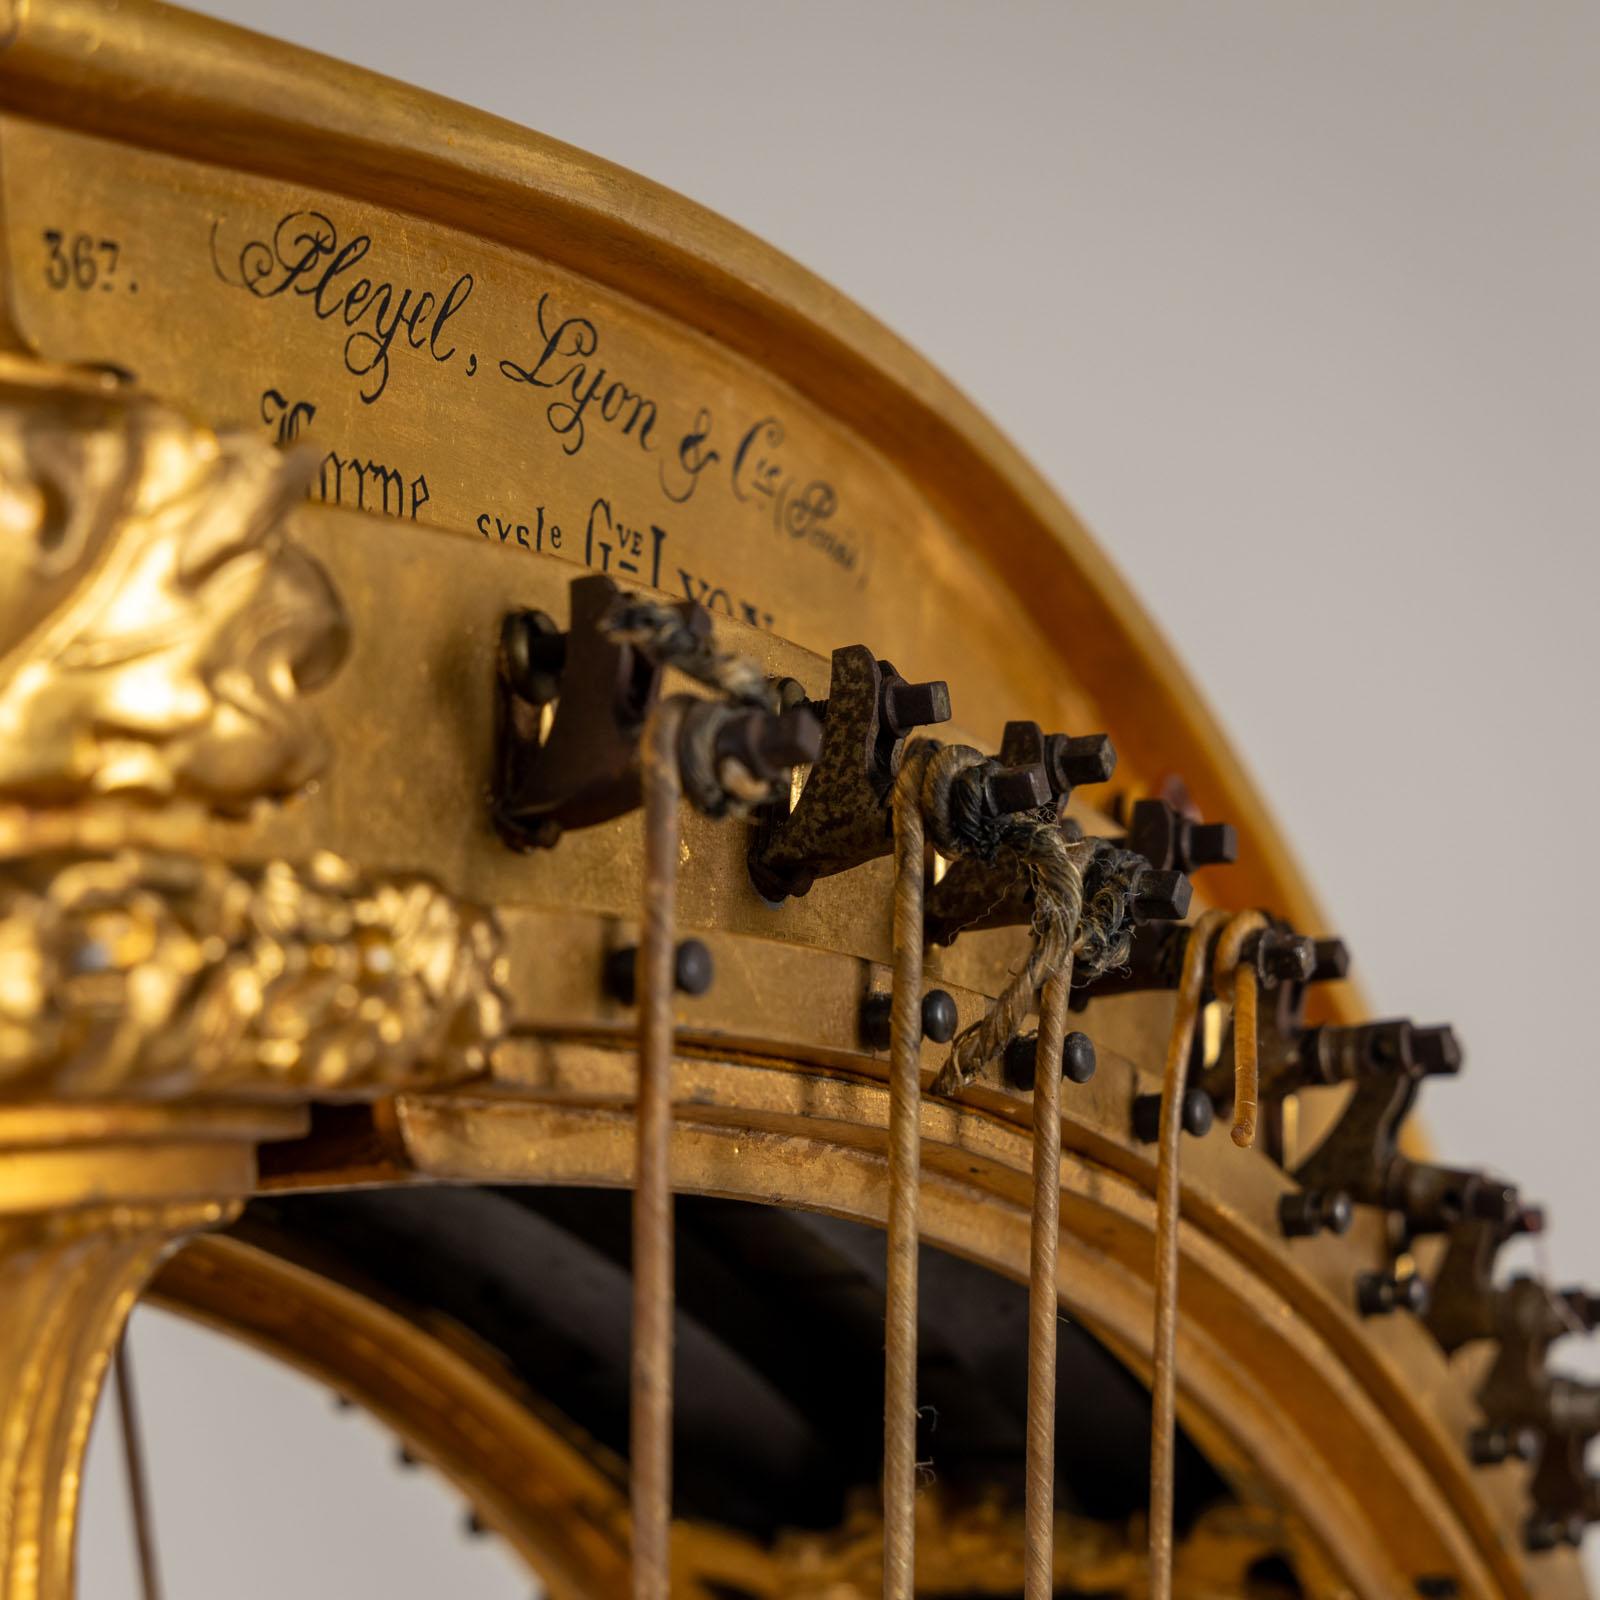 Chromatic Double Harp, Pleyel, Lyon & Cie, Paris, circa 1900 For Sale 7